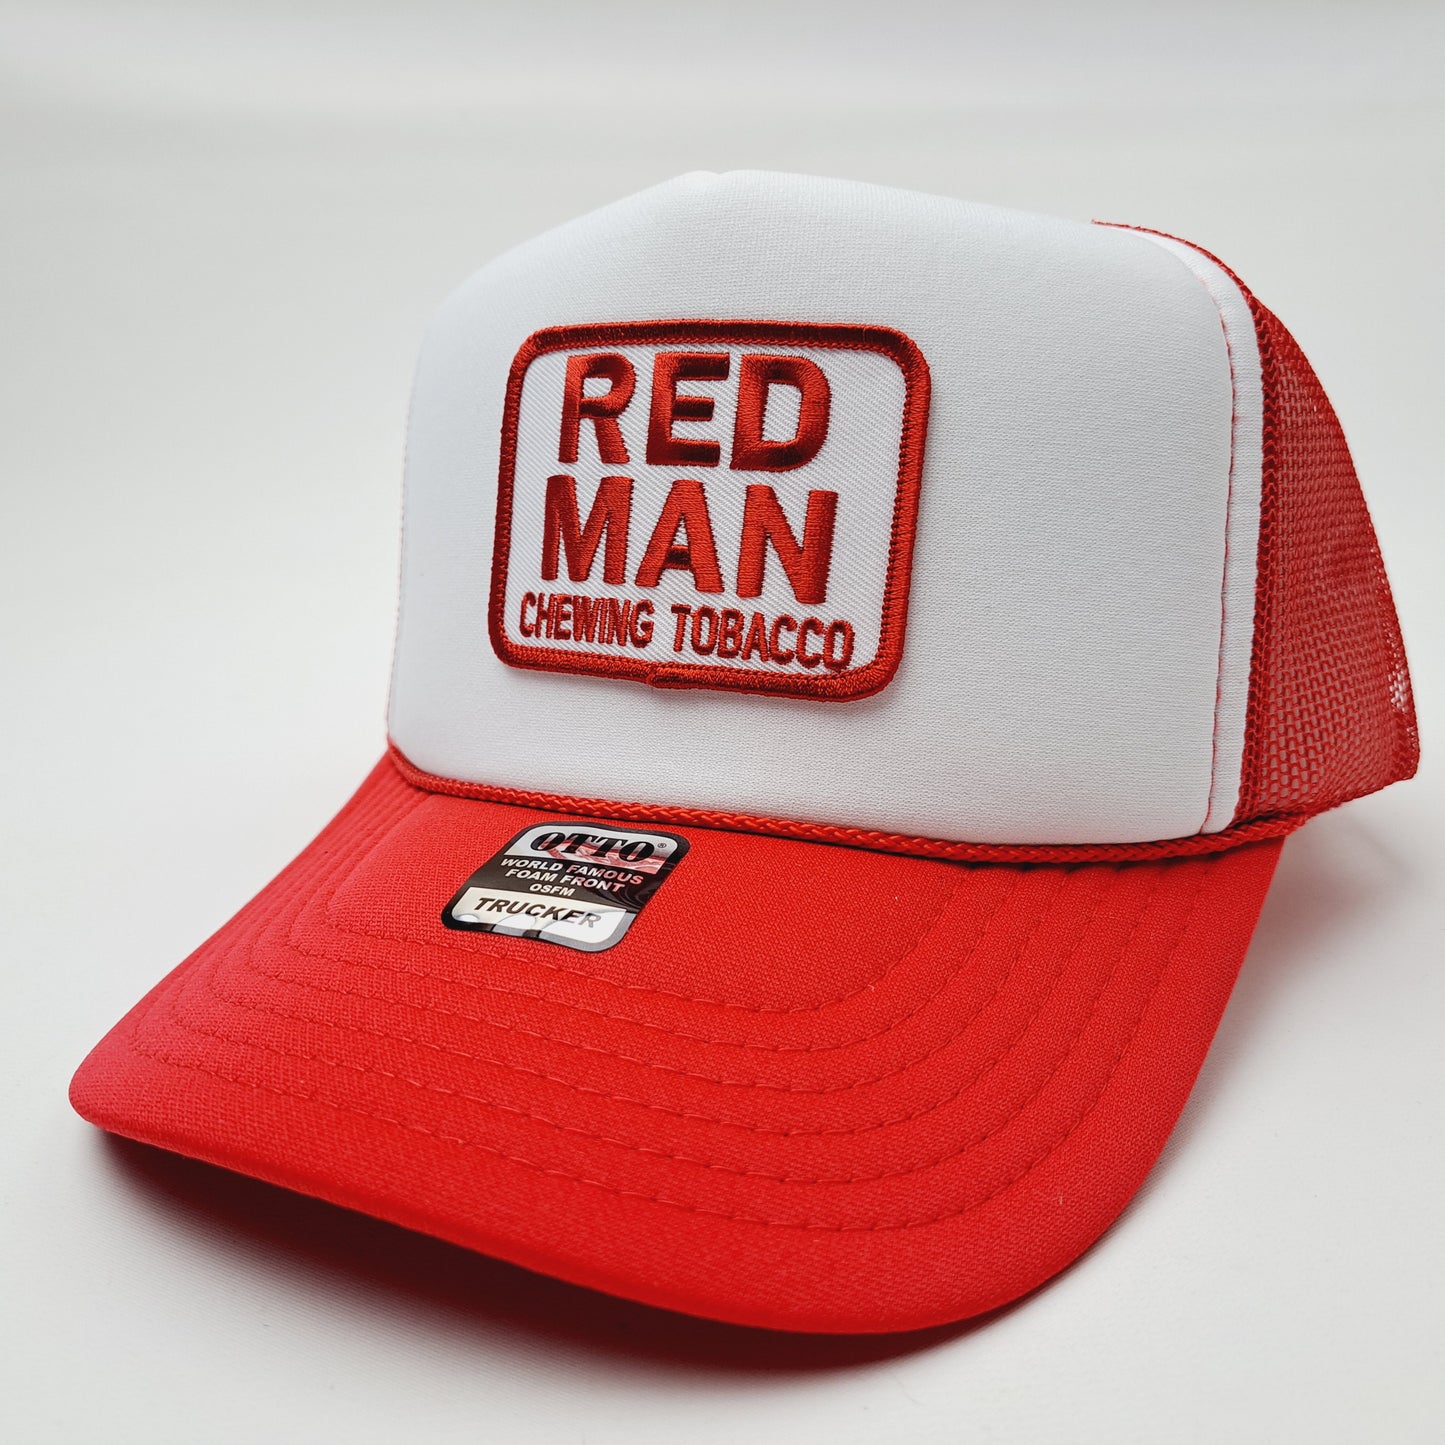 Red Man Chewing Tobacco Foam Mesh Trucker Snapback Red & White